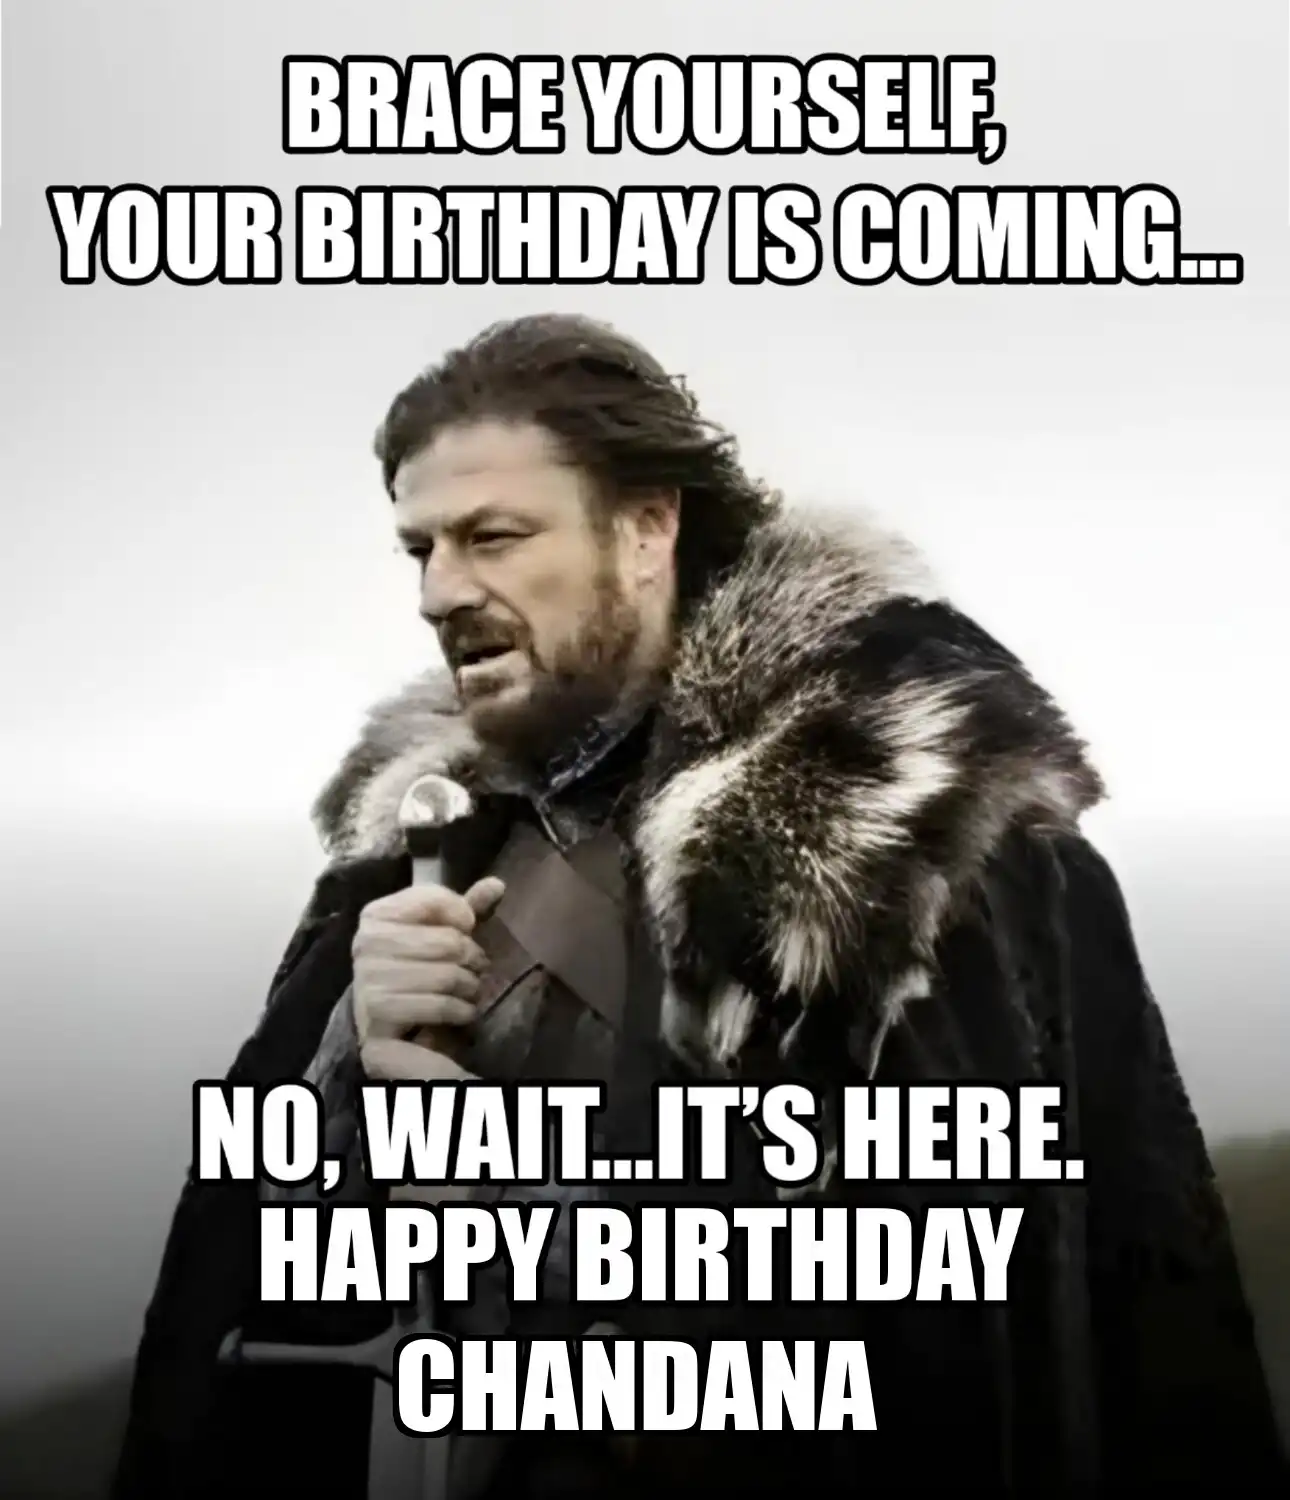 Happy Birthday Chandana Brace Yourself Your Birthday Is Coming Meme